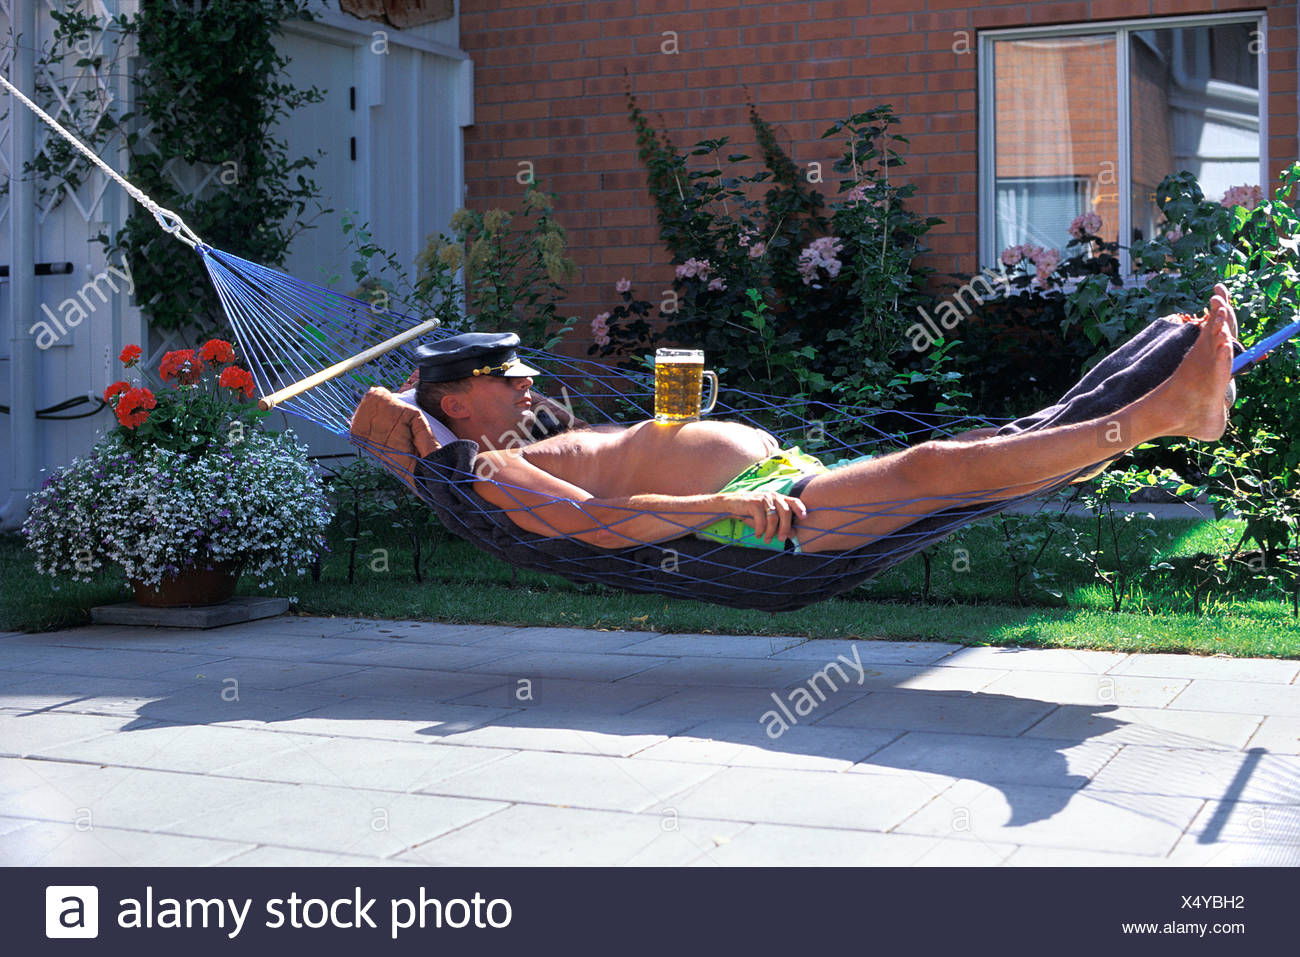 amusing-beer-belly-belly-dozing-garden-hammock-home-house-humor-leather-cap-man-outside-recumbent-lie-X4YBH2.jpg